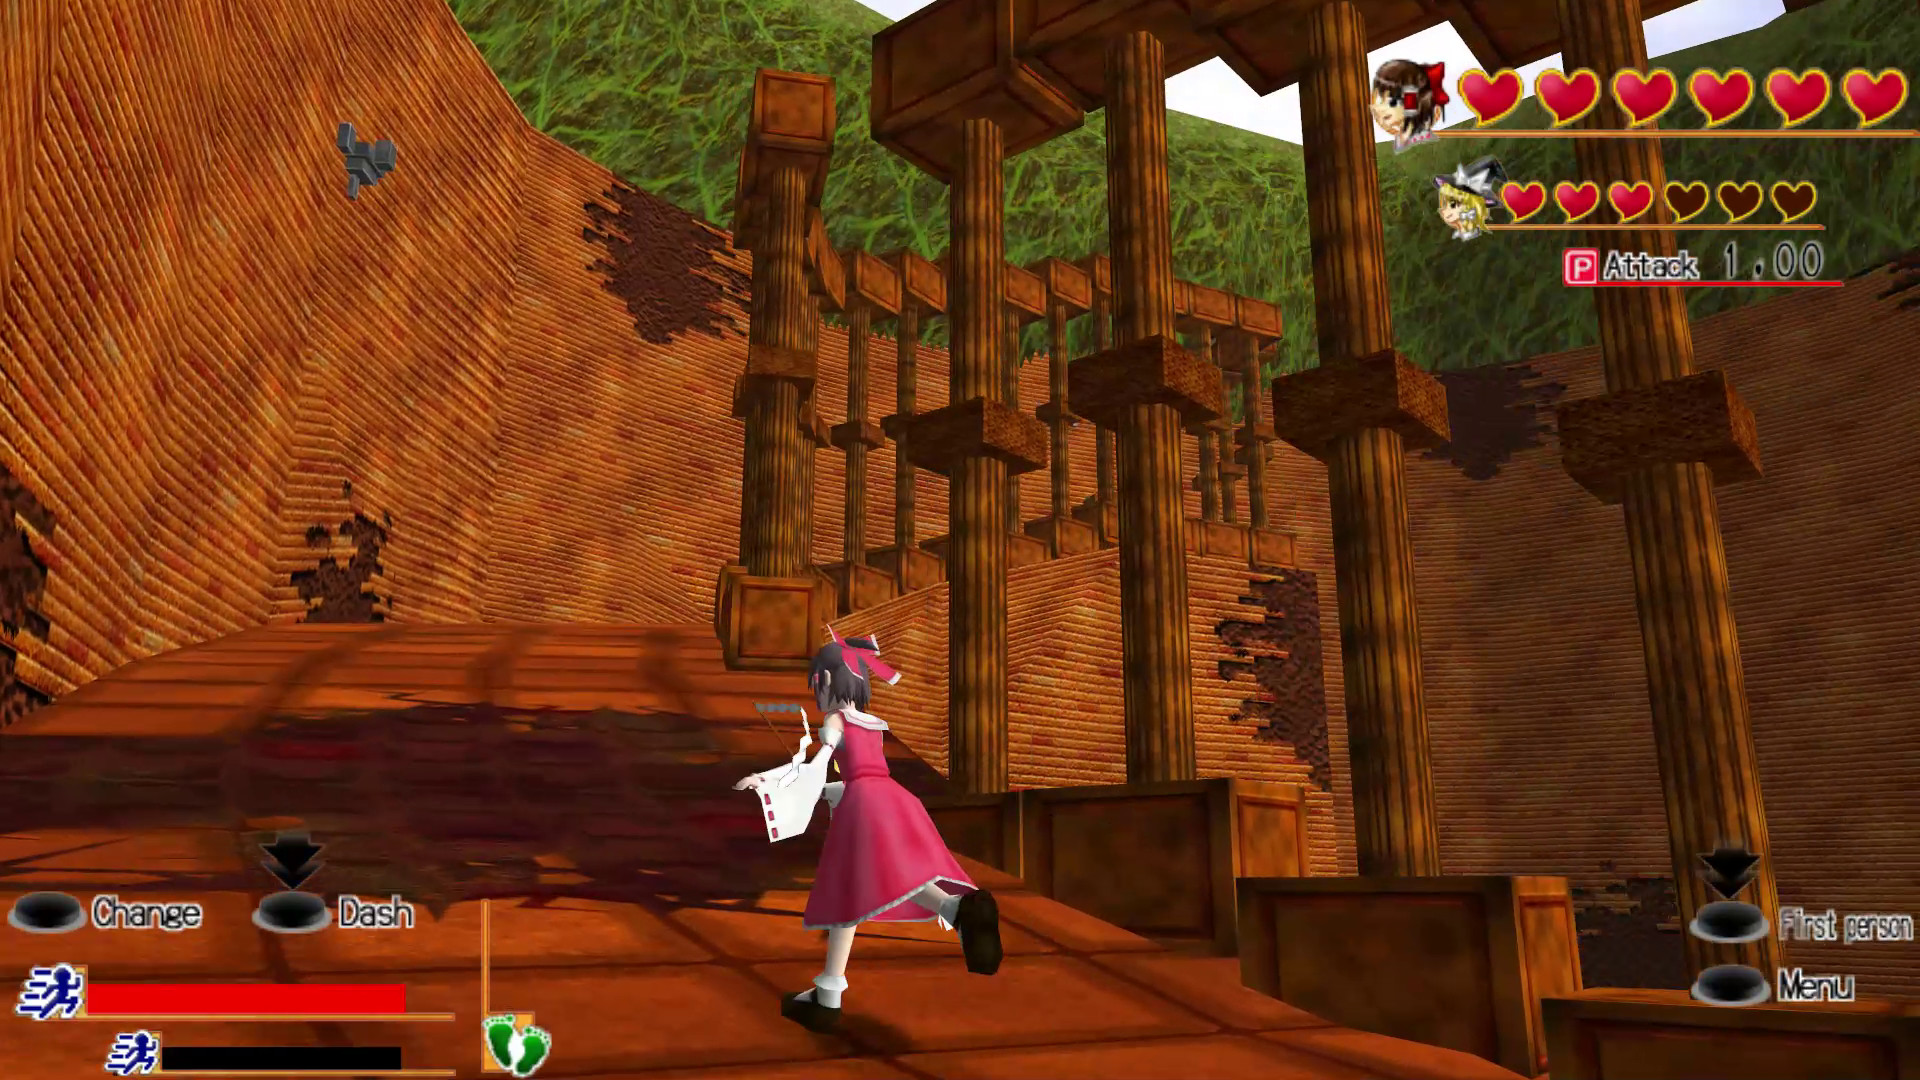 Touhou 3D Dungeon Free Download